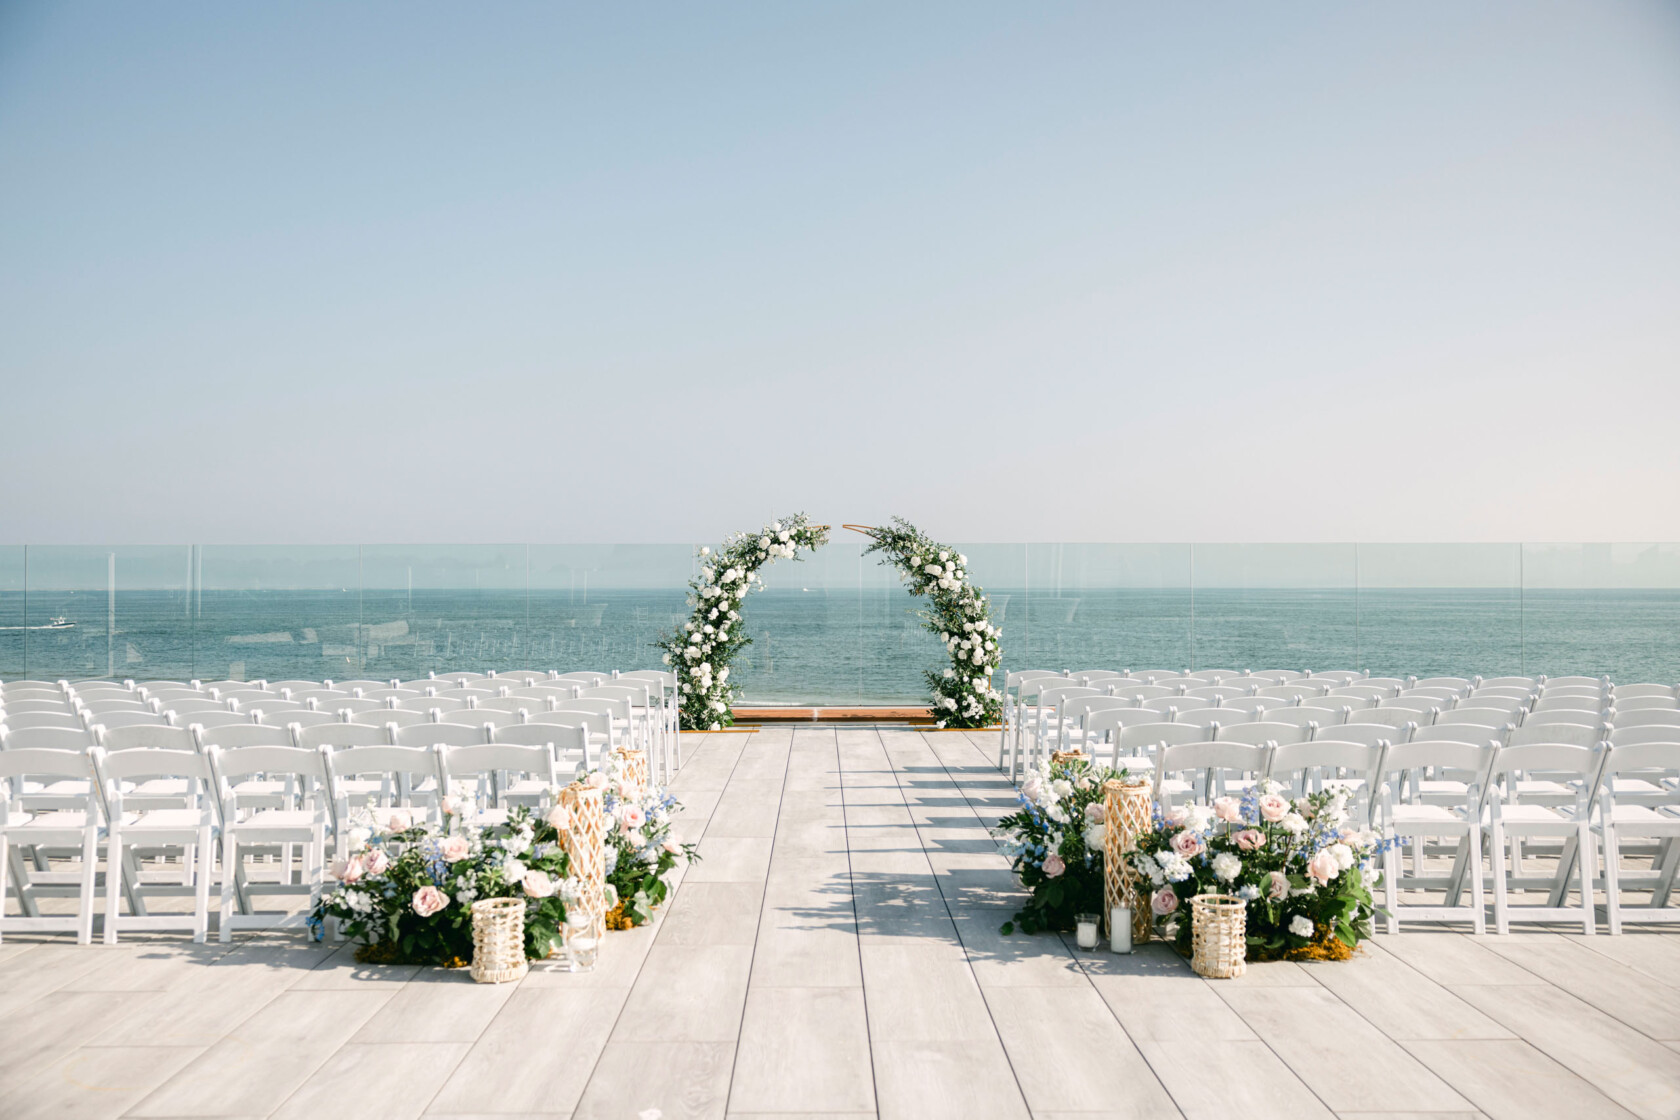 wedding ceremony setup with a flower arch on a beach.